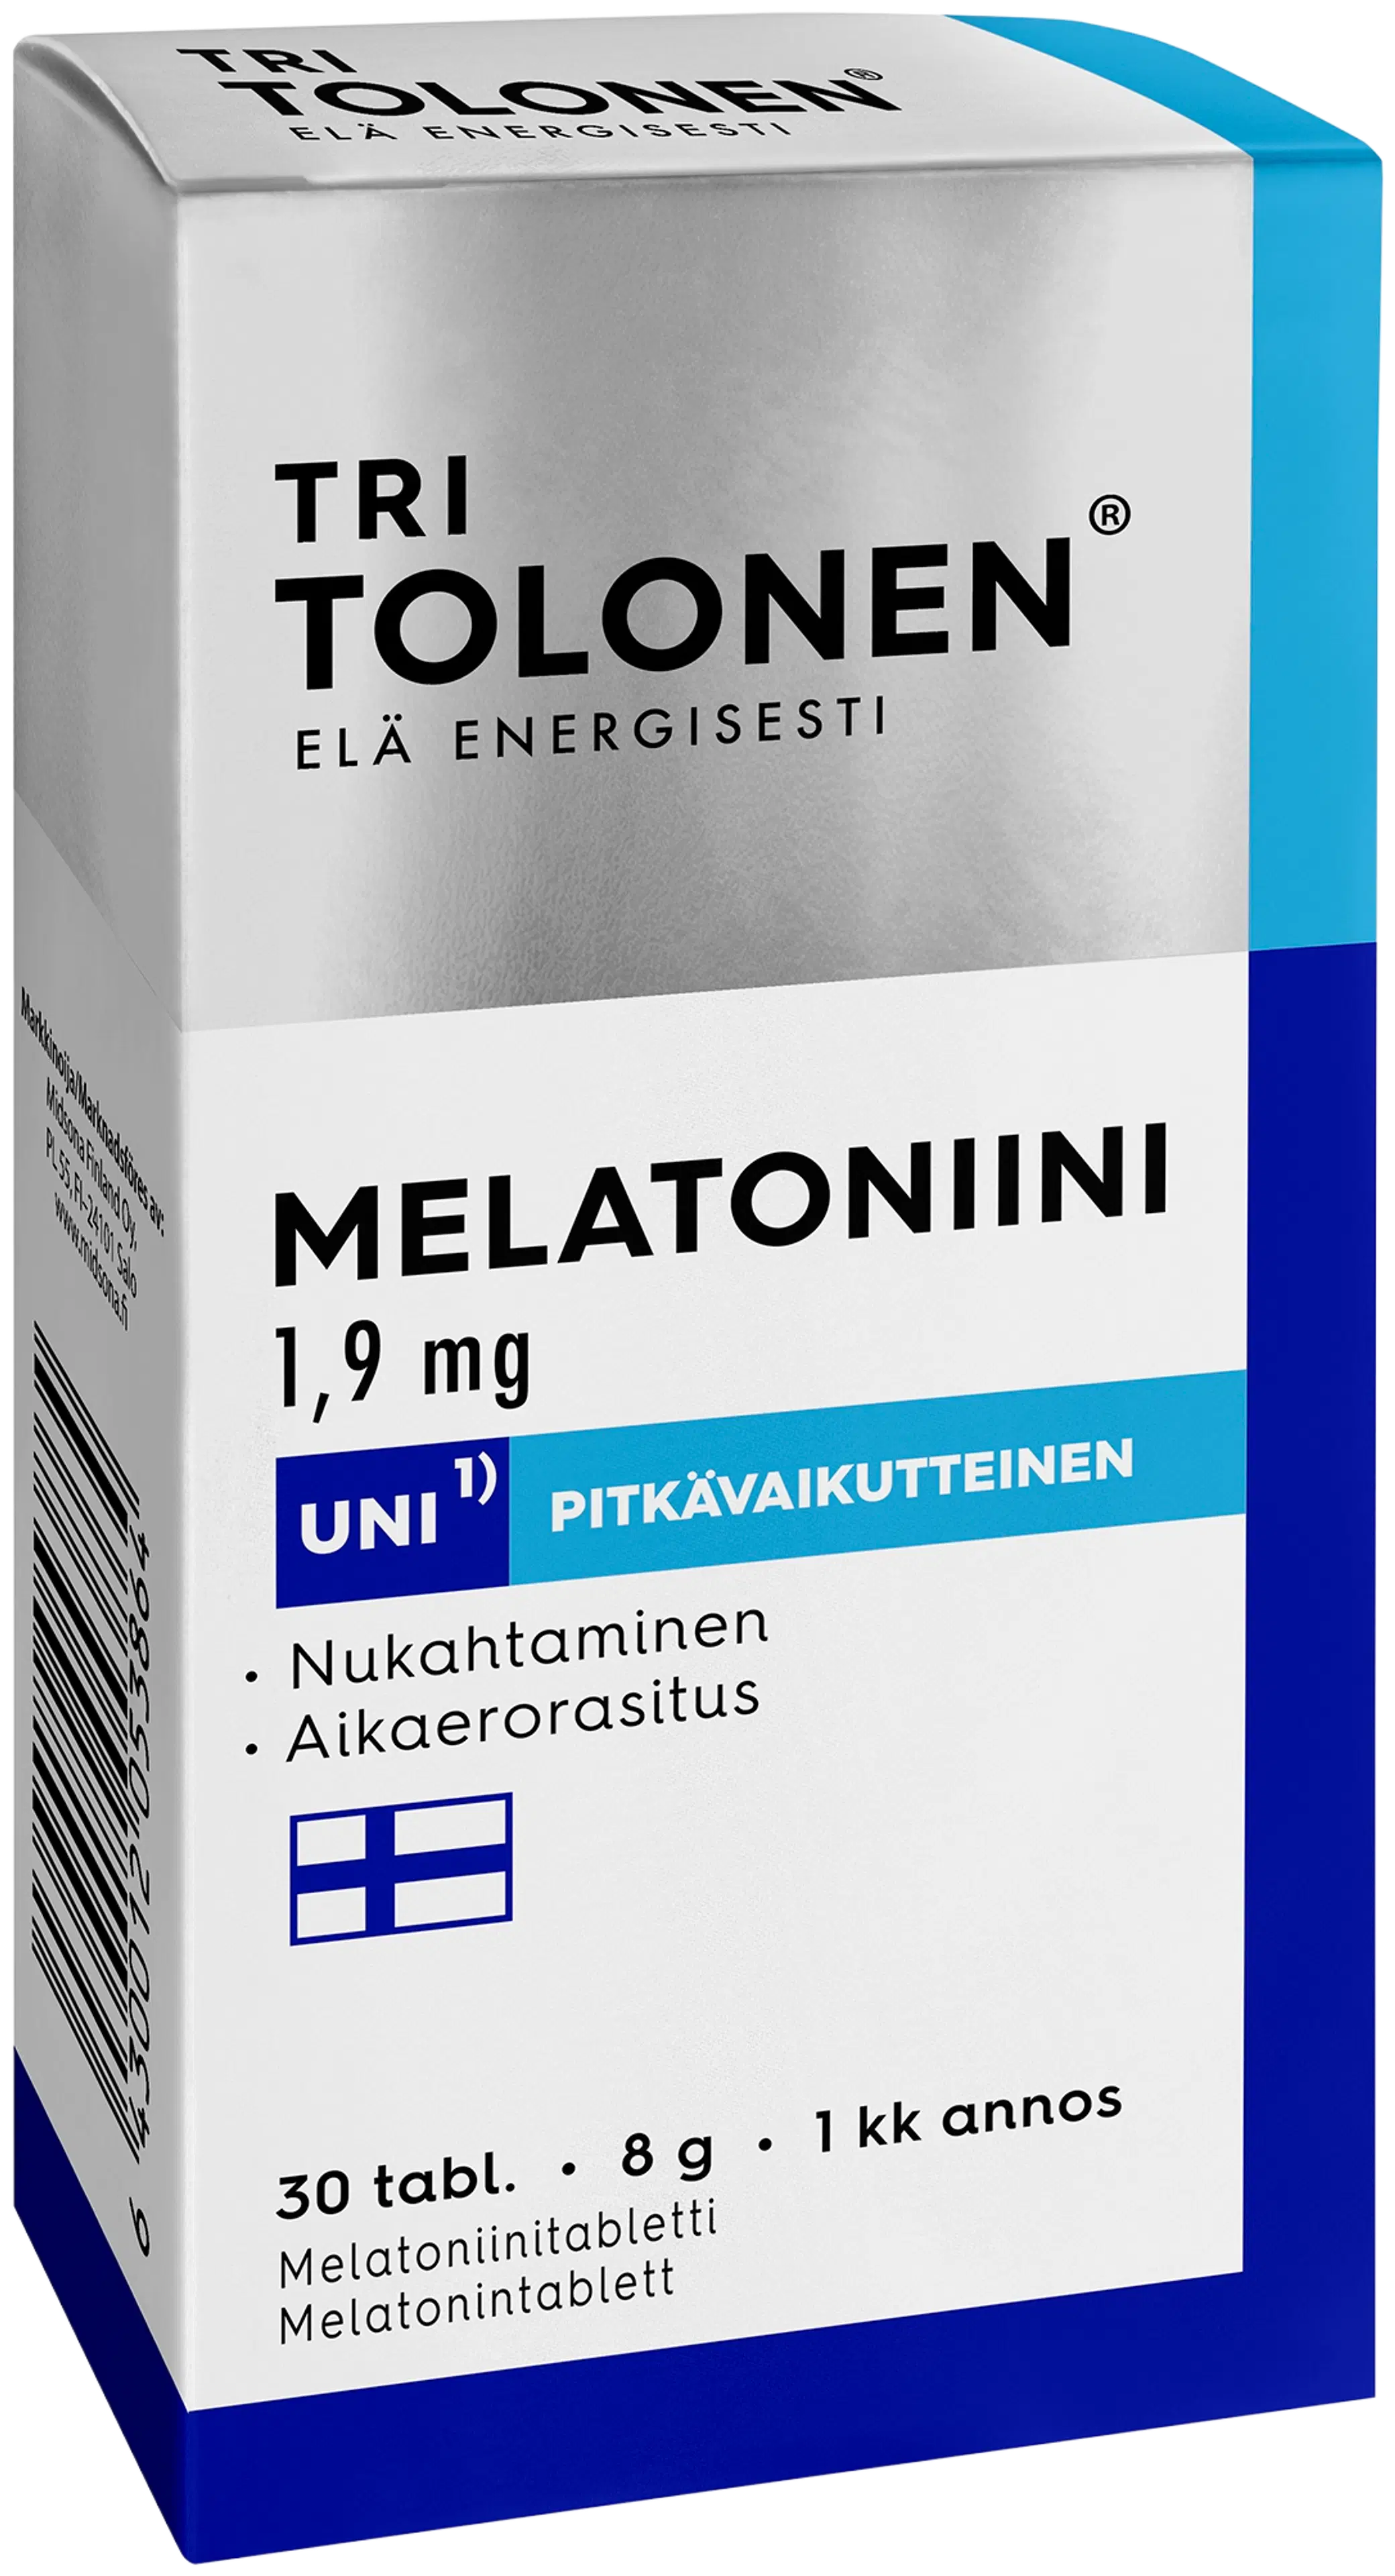 Tolonen Melatoniini 1,9mg 30tabl